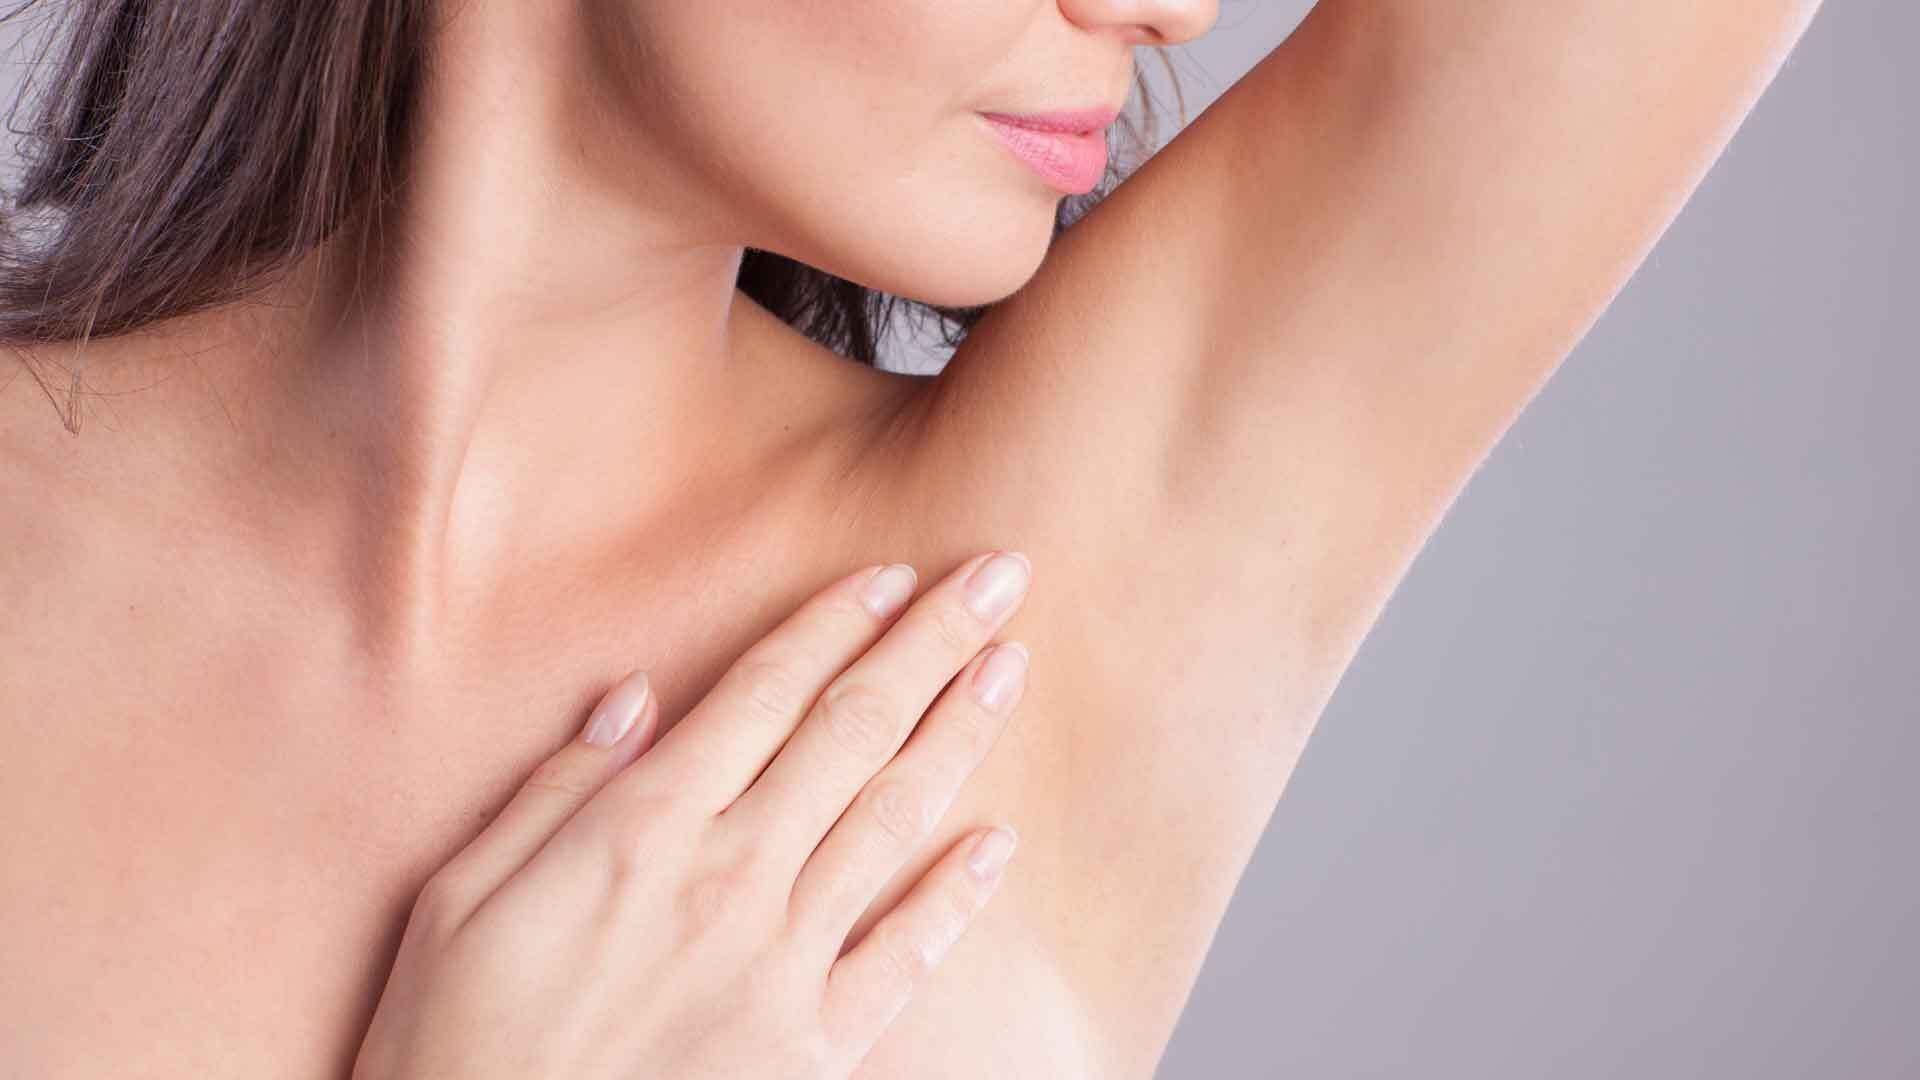 Armpit Detox: THE secret tip against sweaty odor?